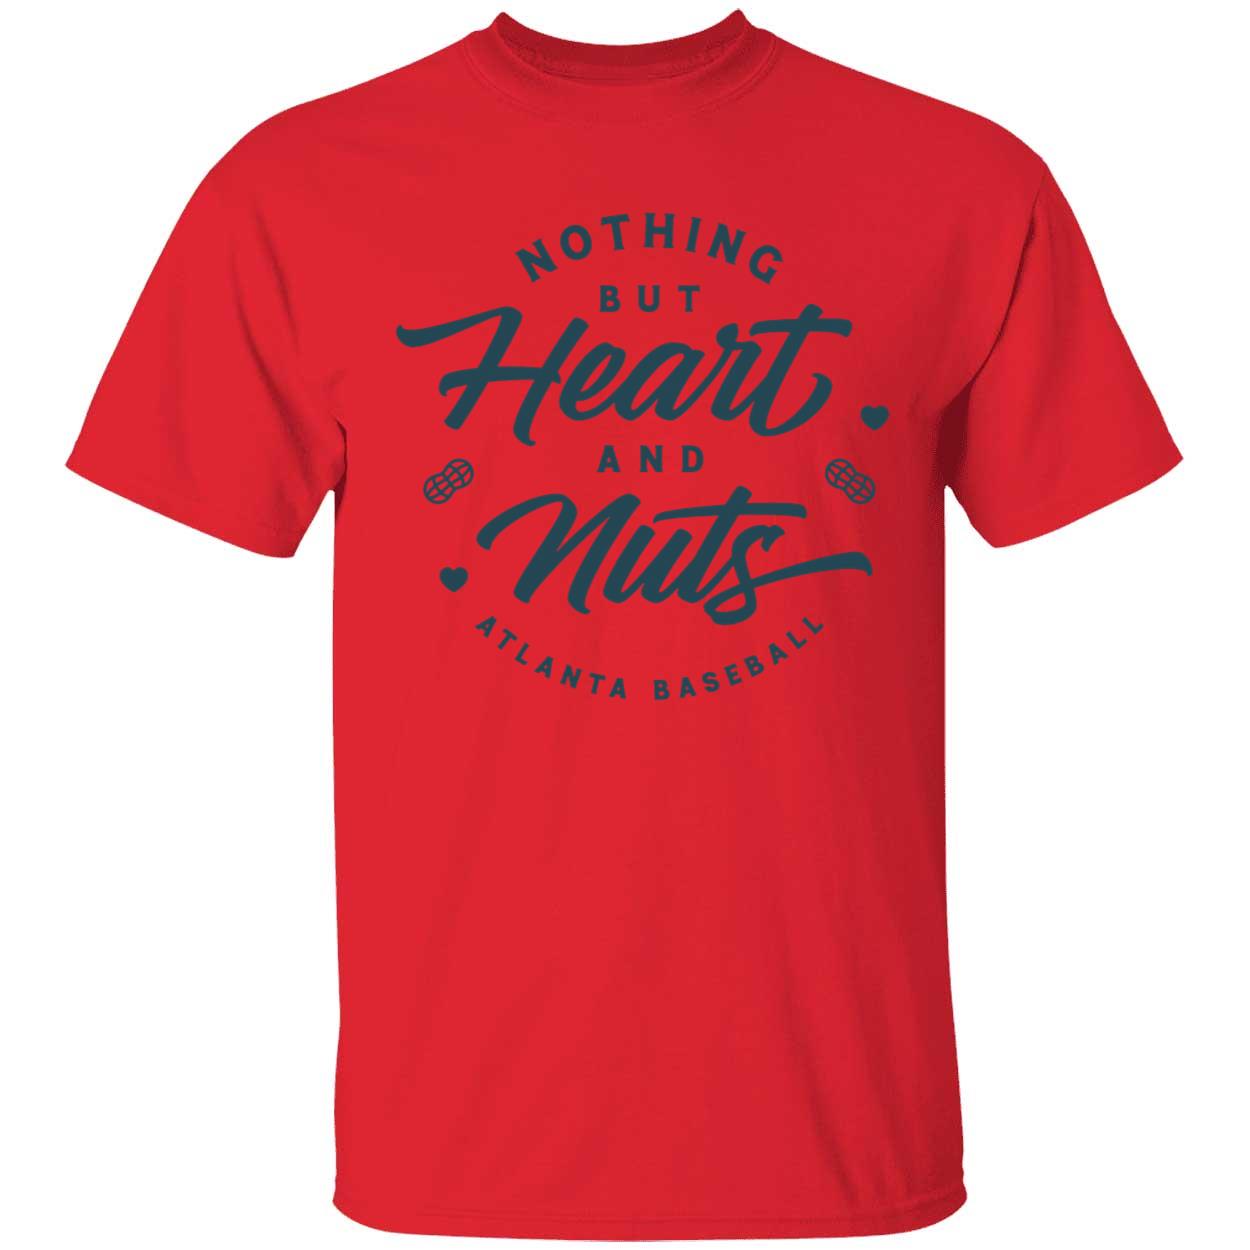 Atlanta Braves Baseball Nothing But Heart And Nuts T-Shirt, hoodie